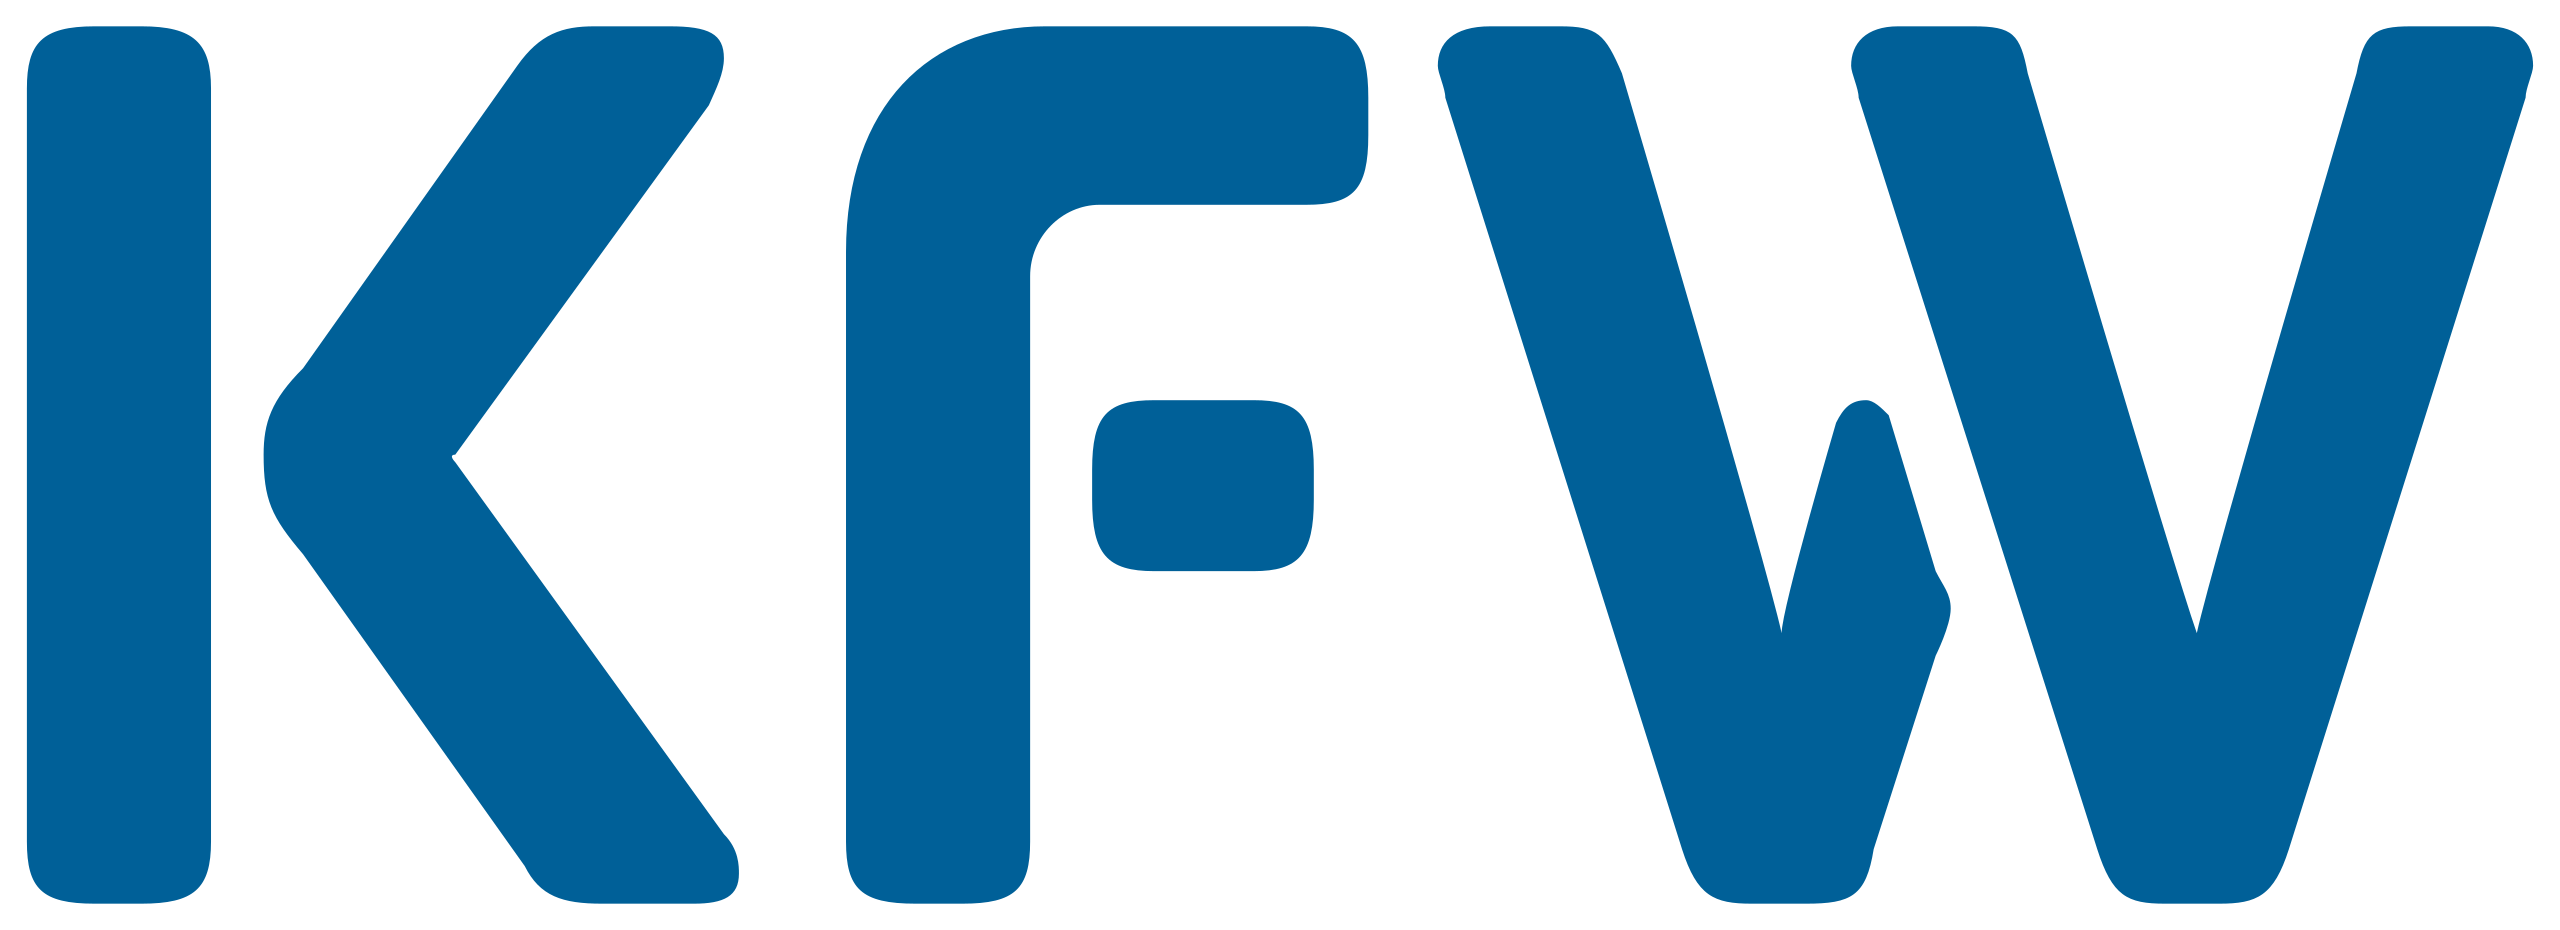 Abbildung: Logo KFW